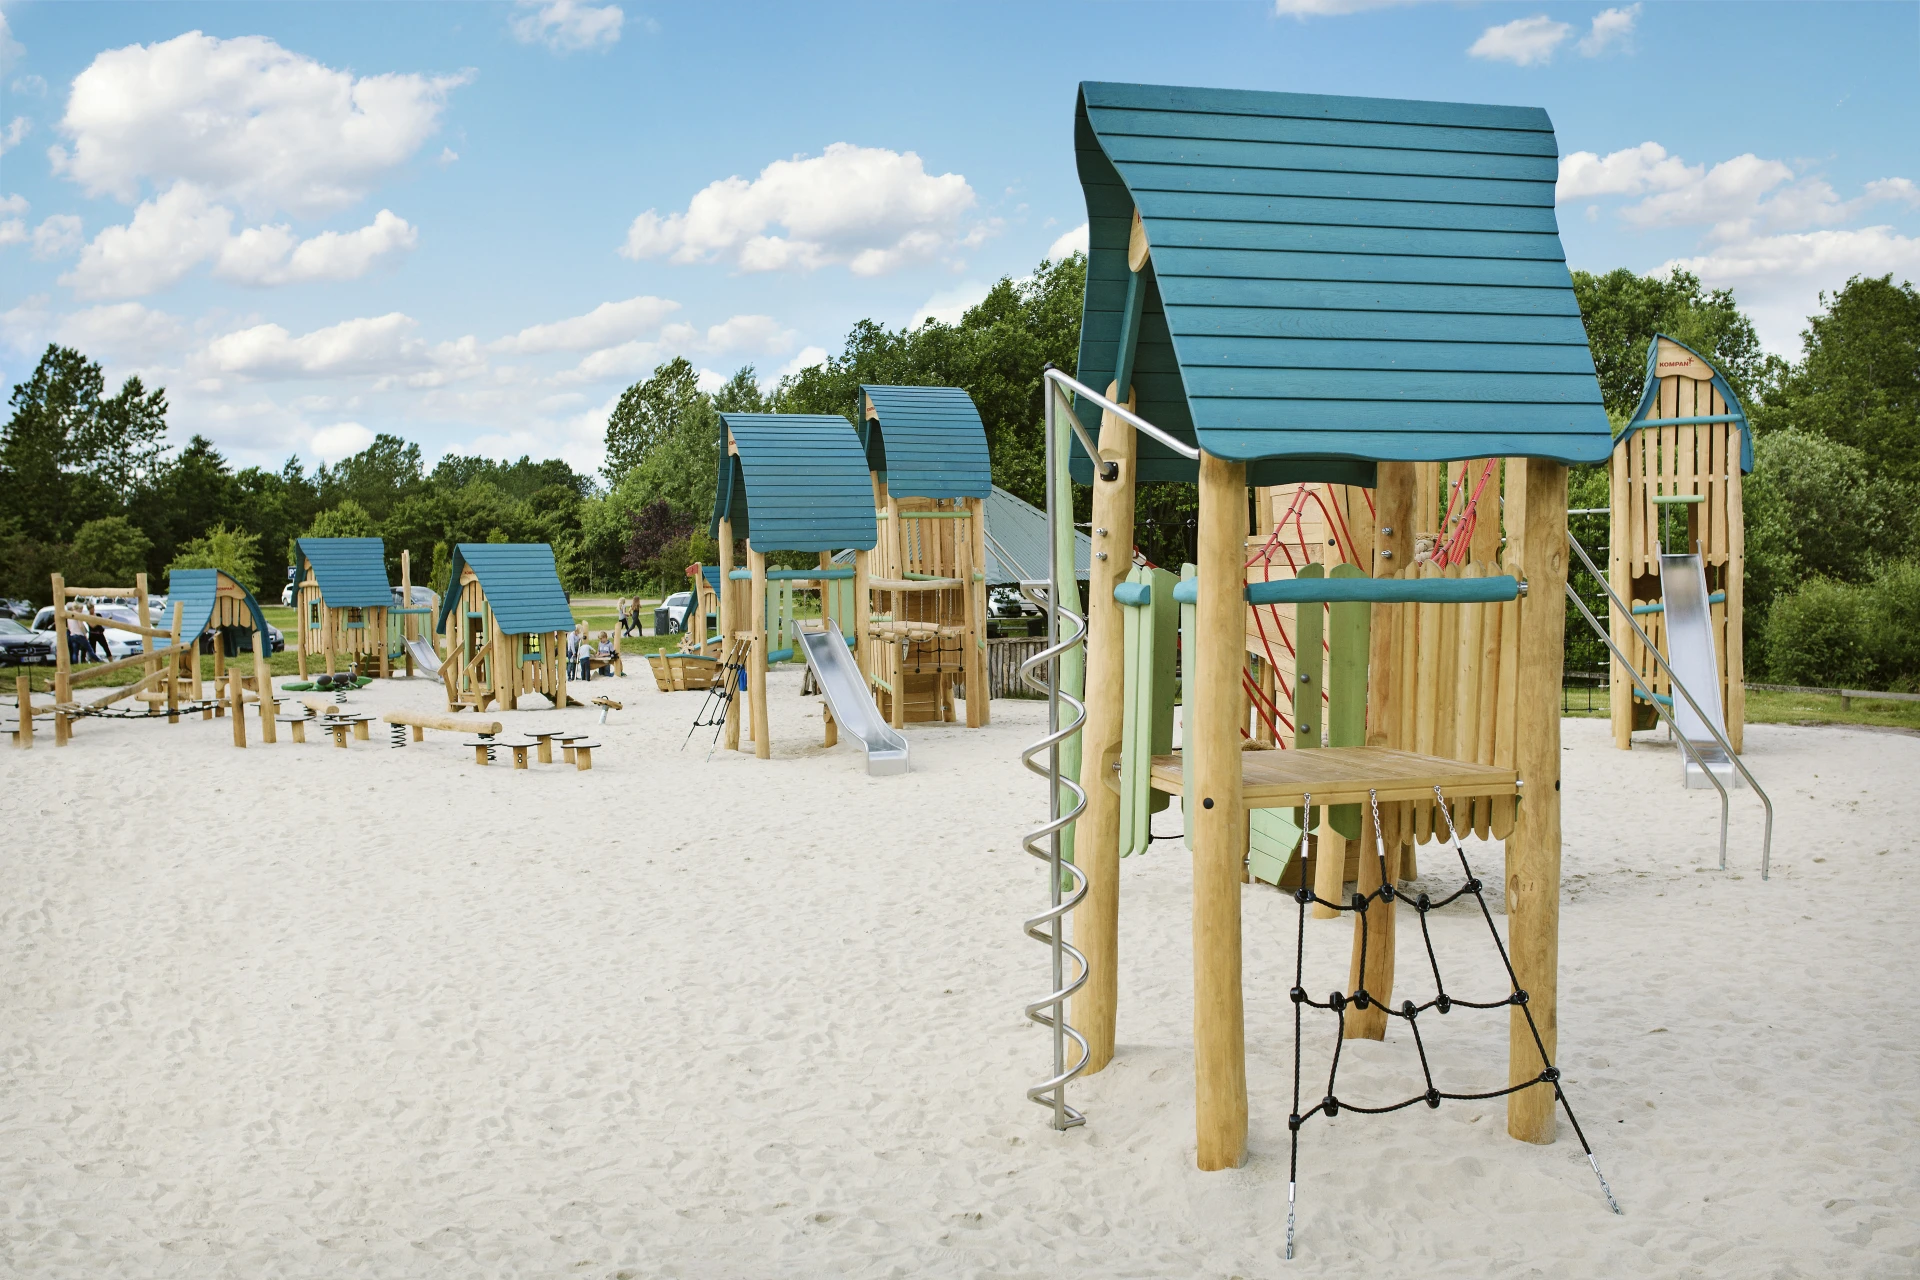 A Robinia playground and playhouses